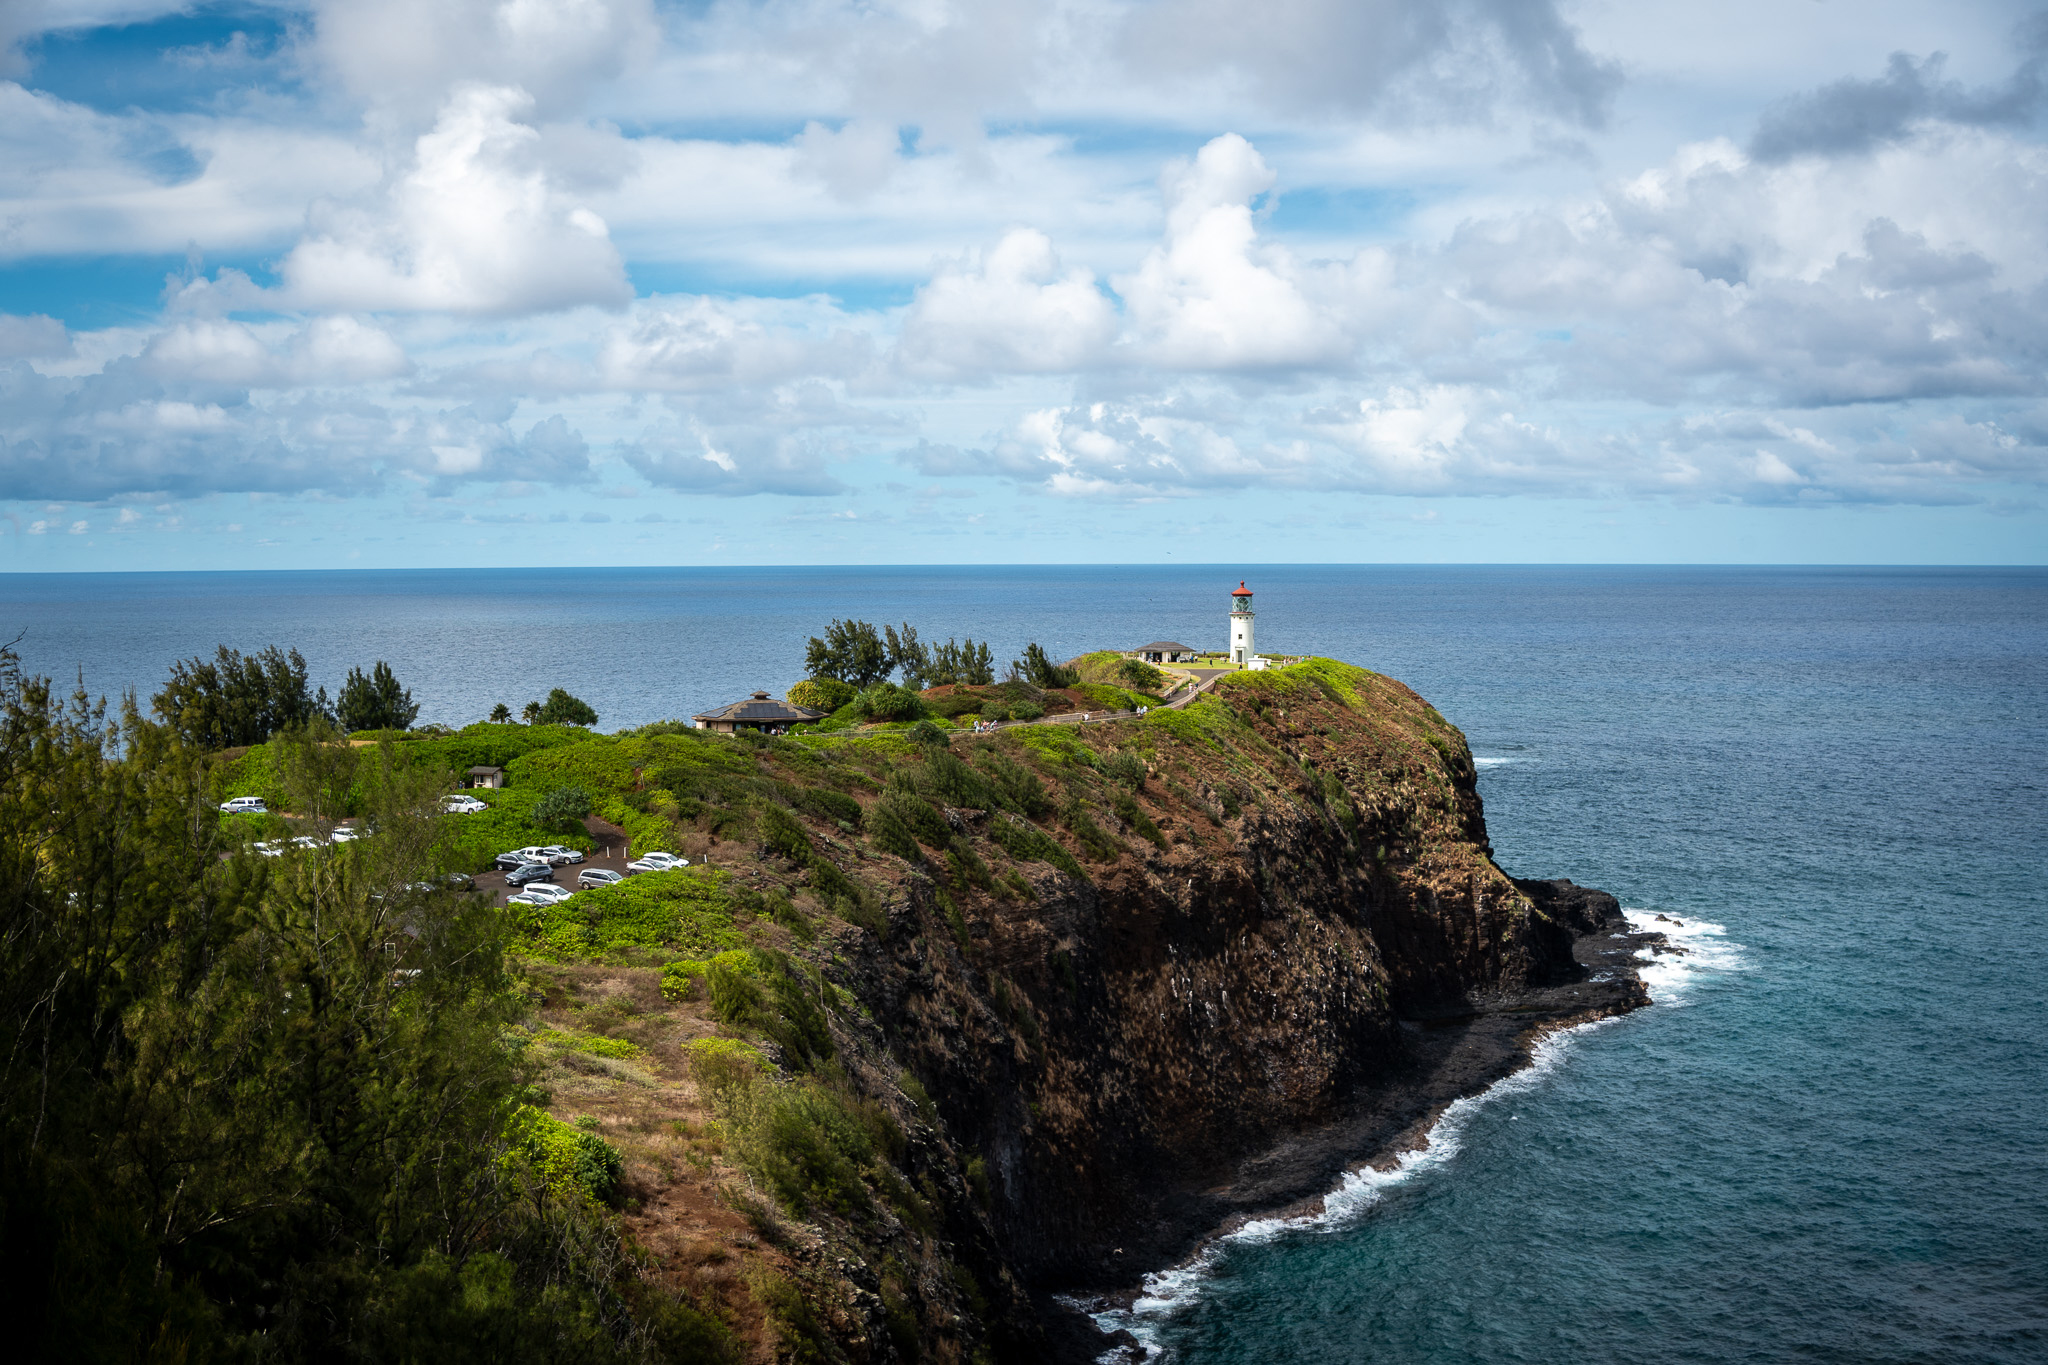 Kilauea Lighthouse Kauai Hawaii viewpoint